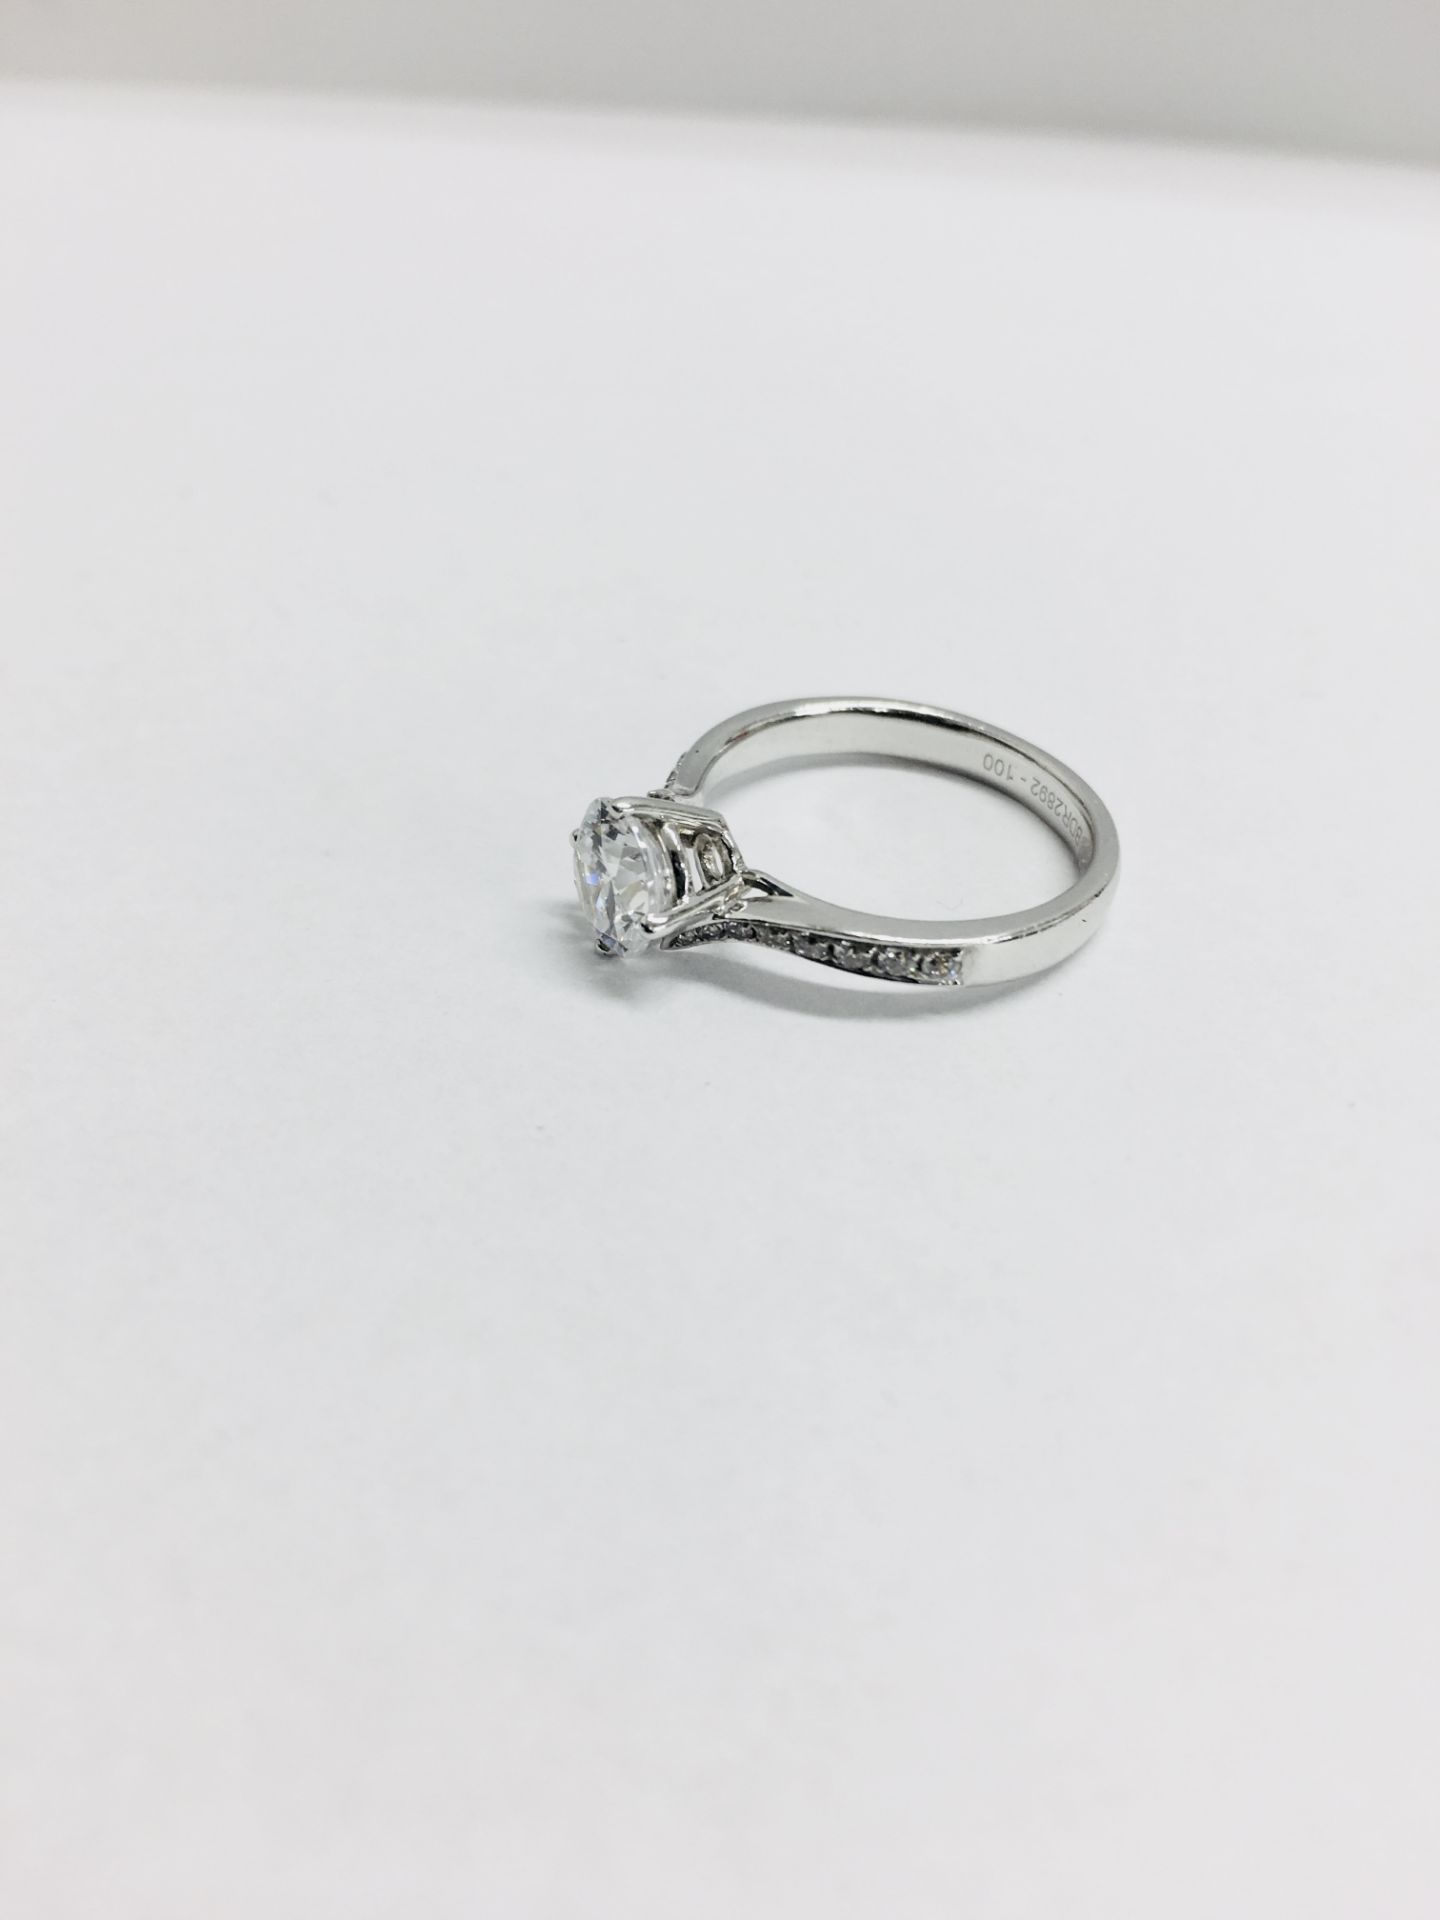 Platinum diamond solitaire ring ,0.50ct vvs1 clarity F colour natural brilliant cut diamond,3. - Image 7 of 7